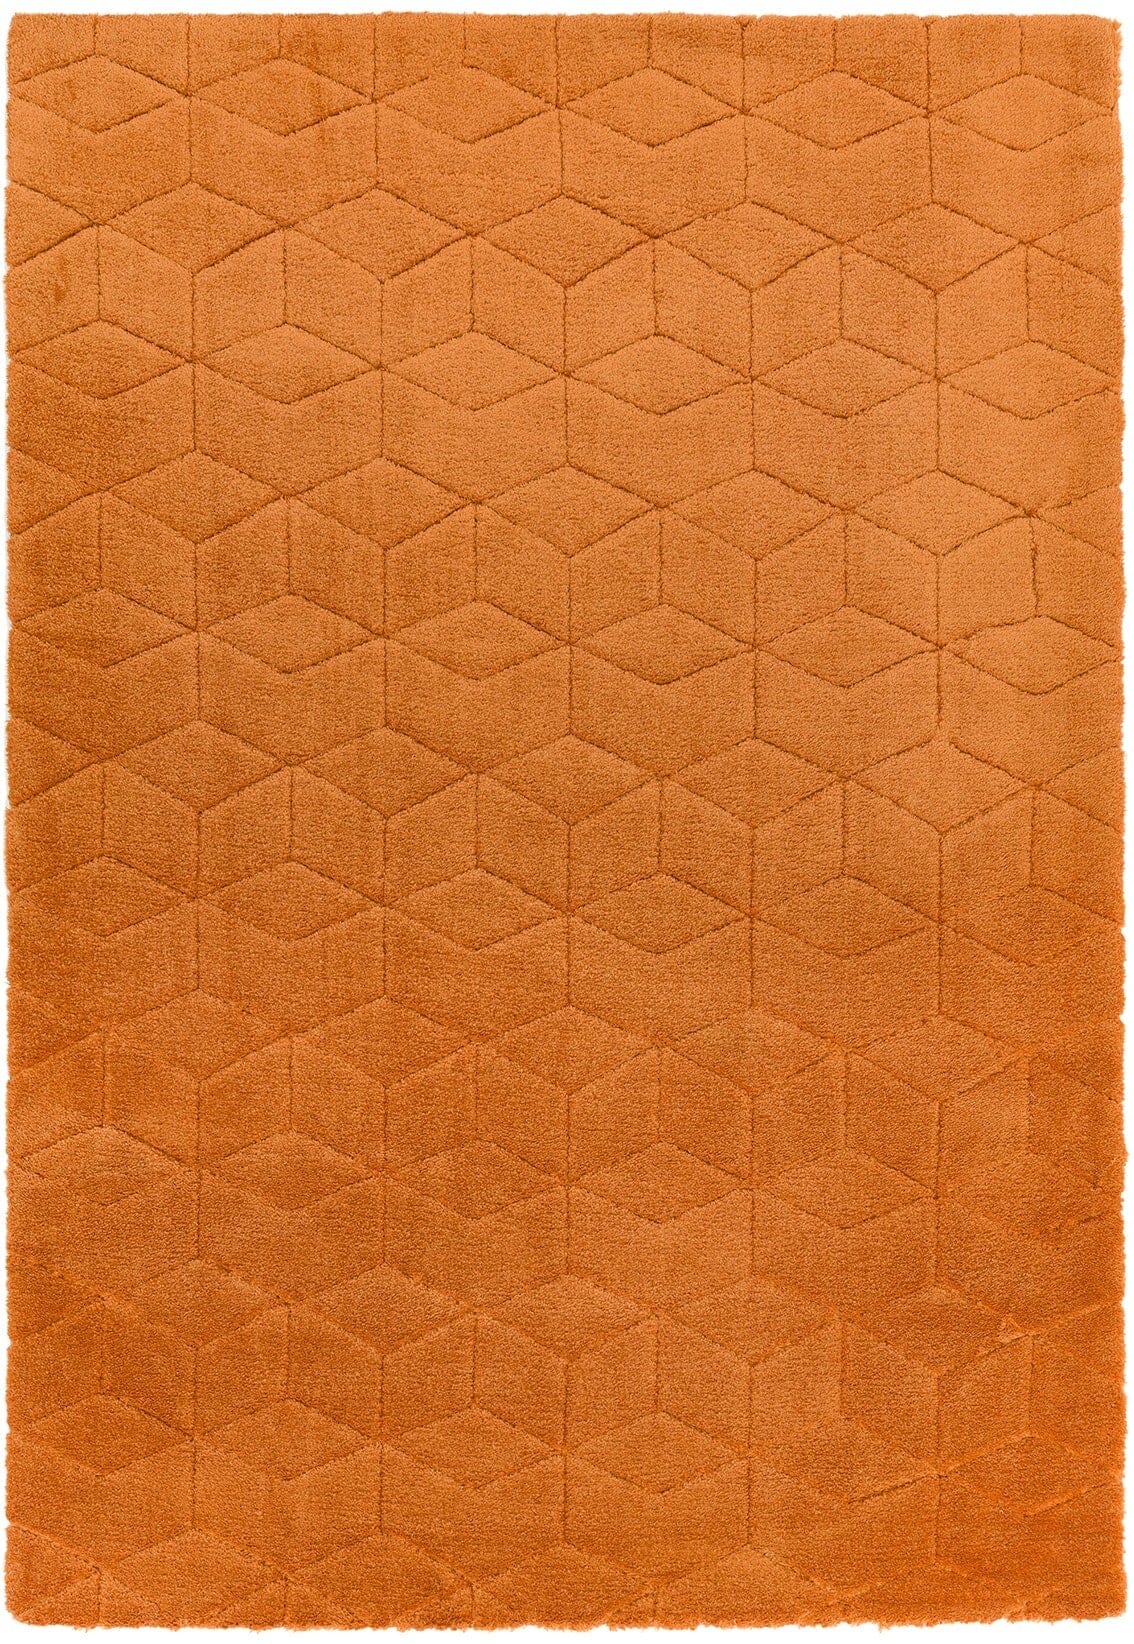 Cozy Orange Soft Touch Geometric Rug